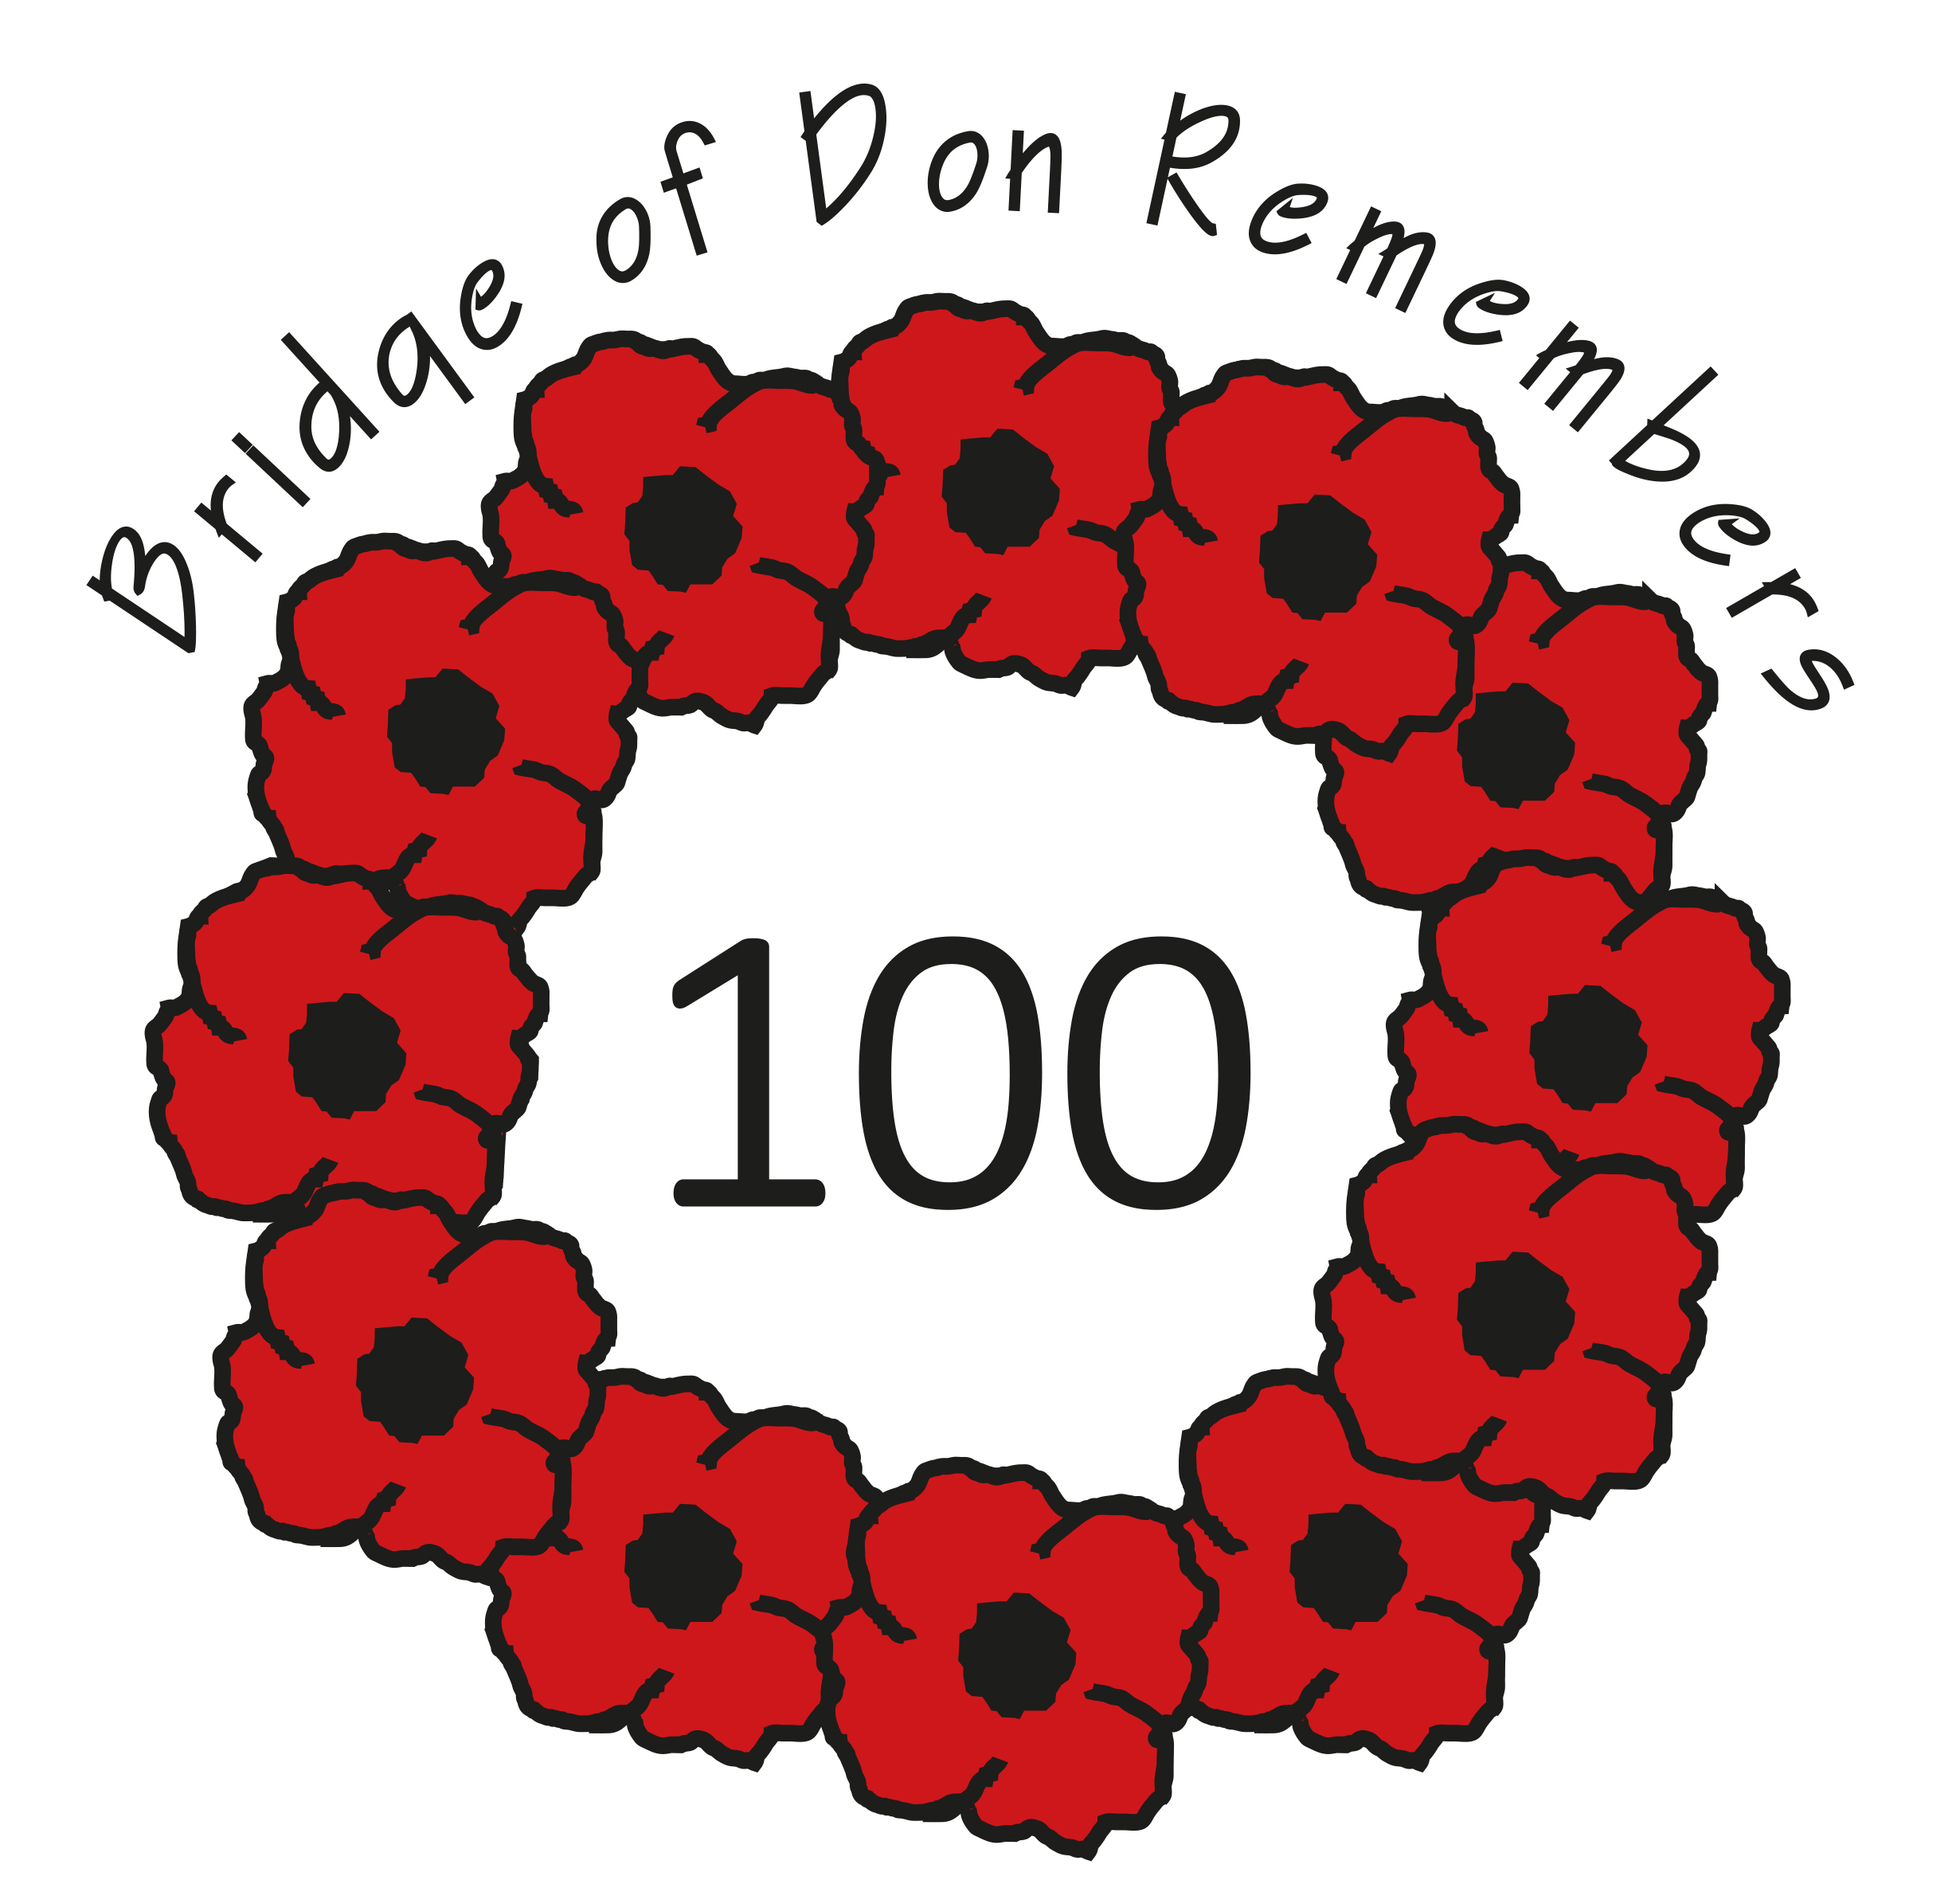 Bridge of Don Remembers: invitation to Special Service Sunday 11 November